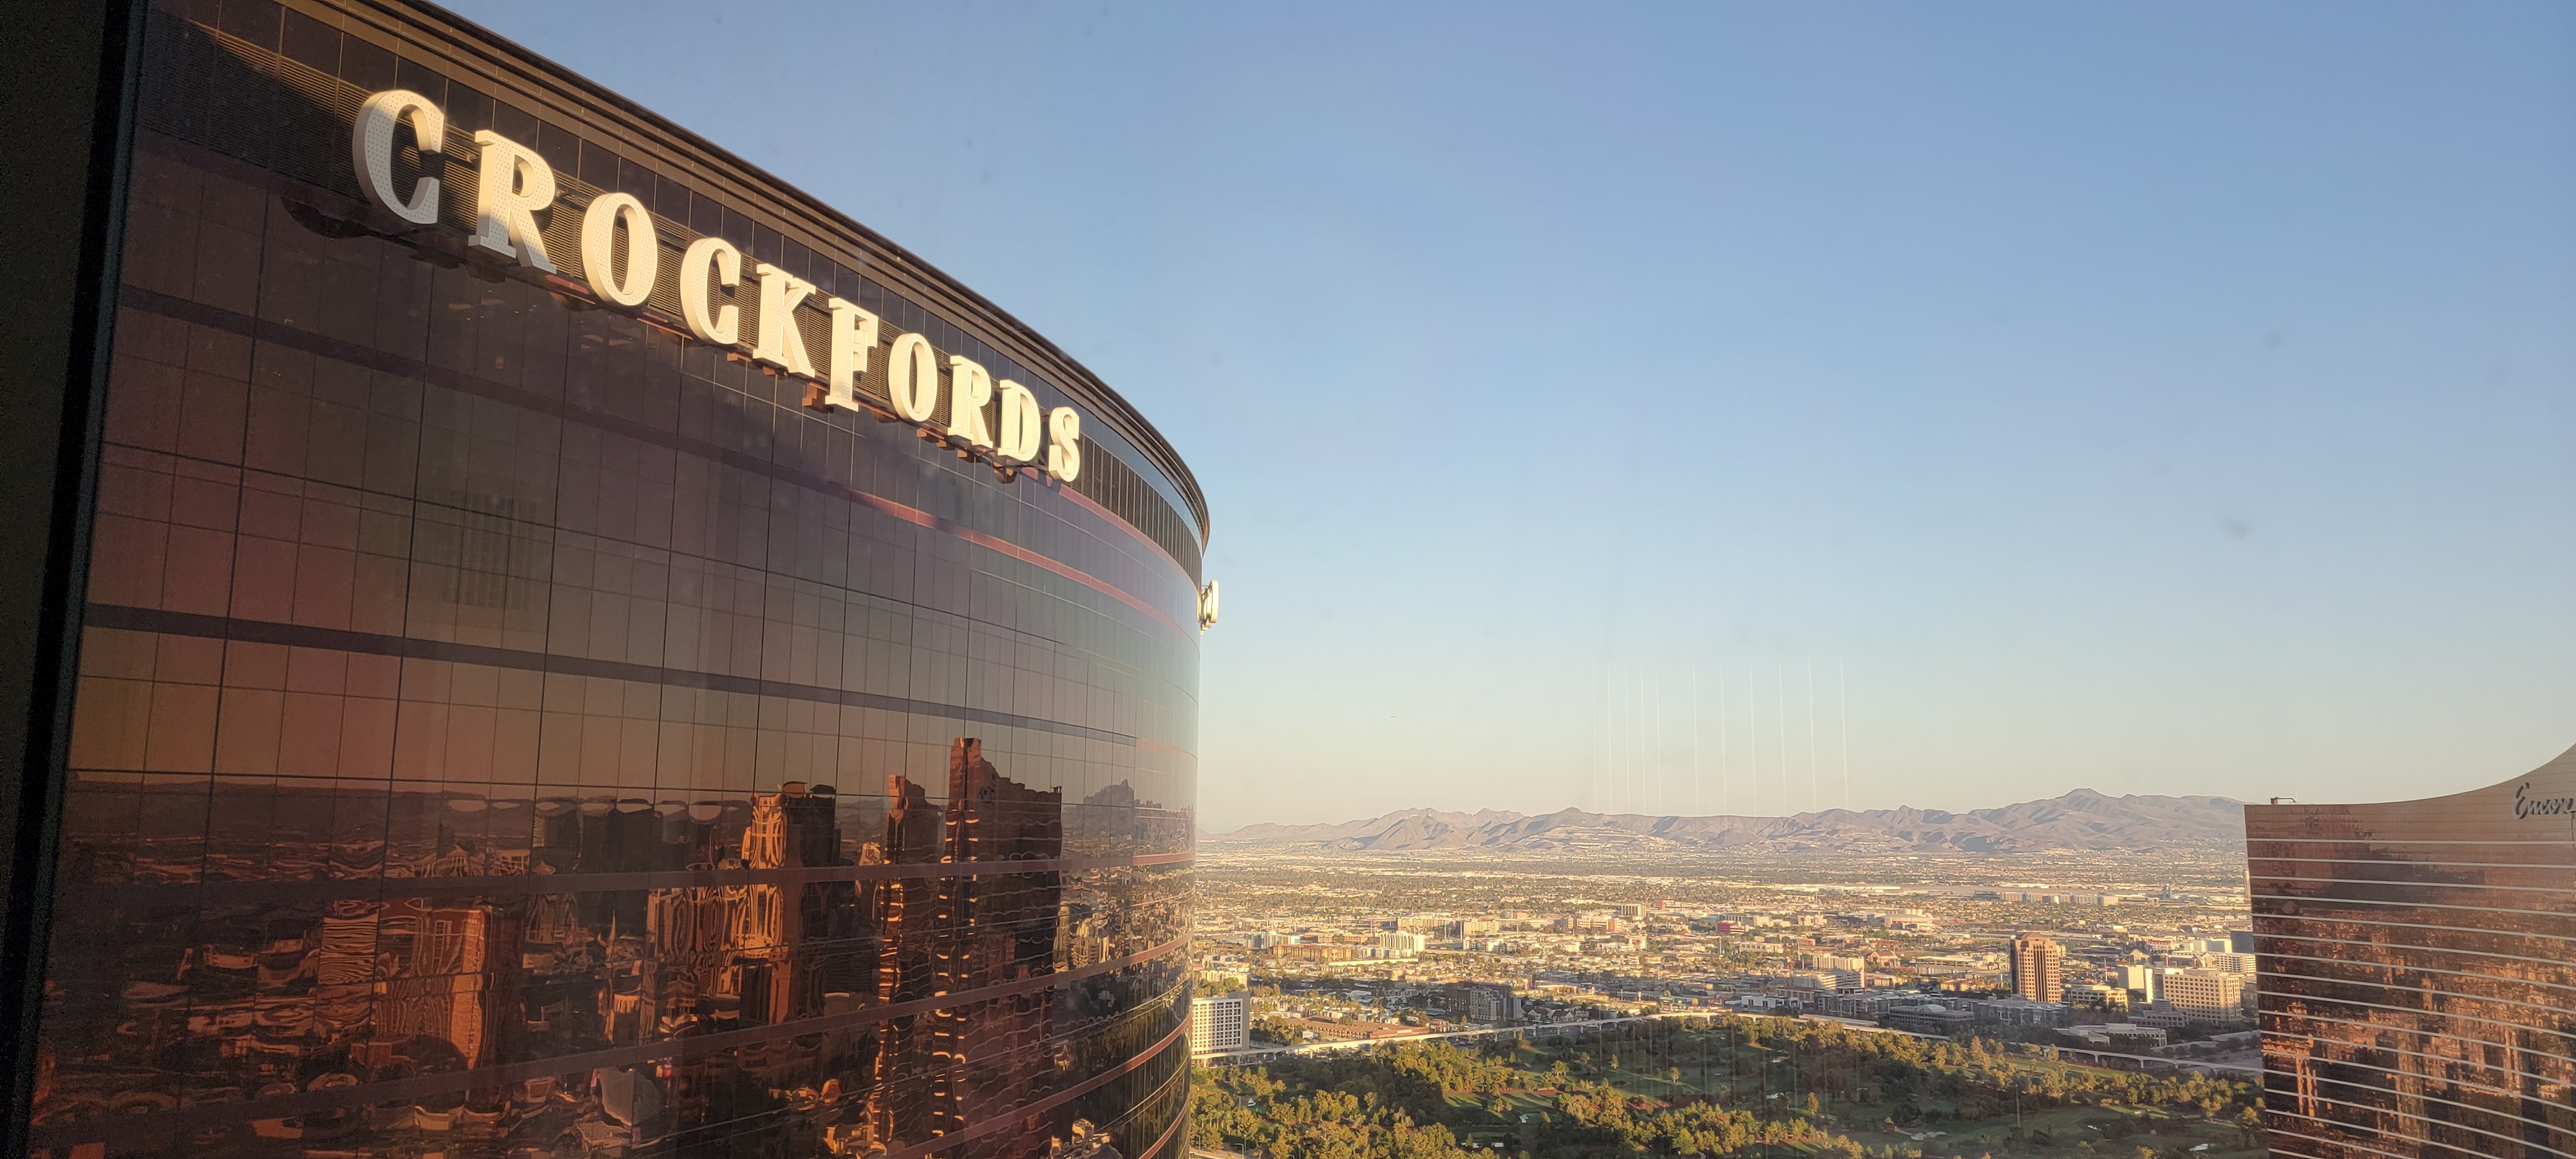 Conrad & Hilton hotels Resorts World Las Vegas review - Turning left for  less